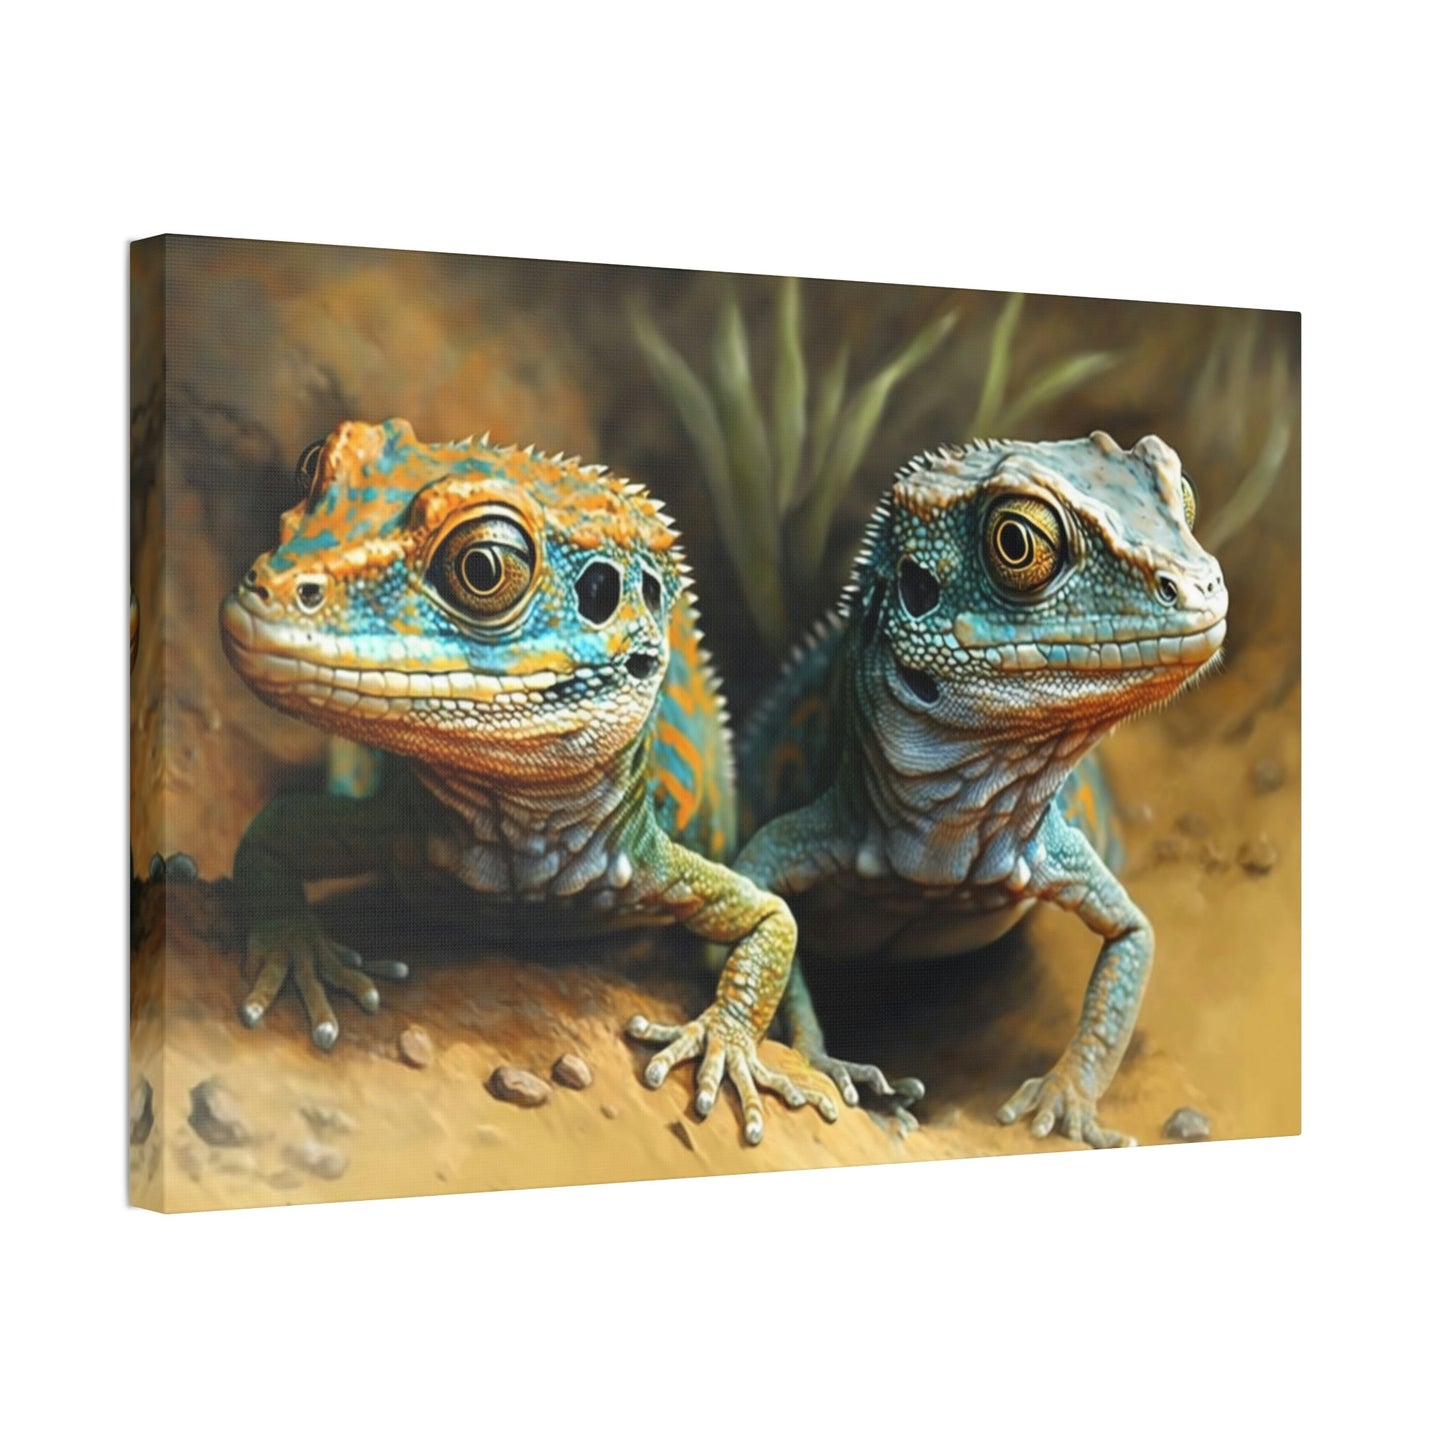 Lizard Kingdom: Canvas Print of Lizards in their Natural Habitat